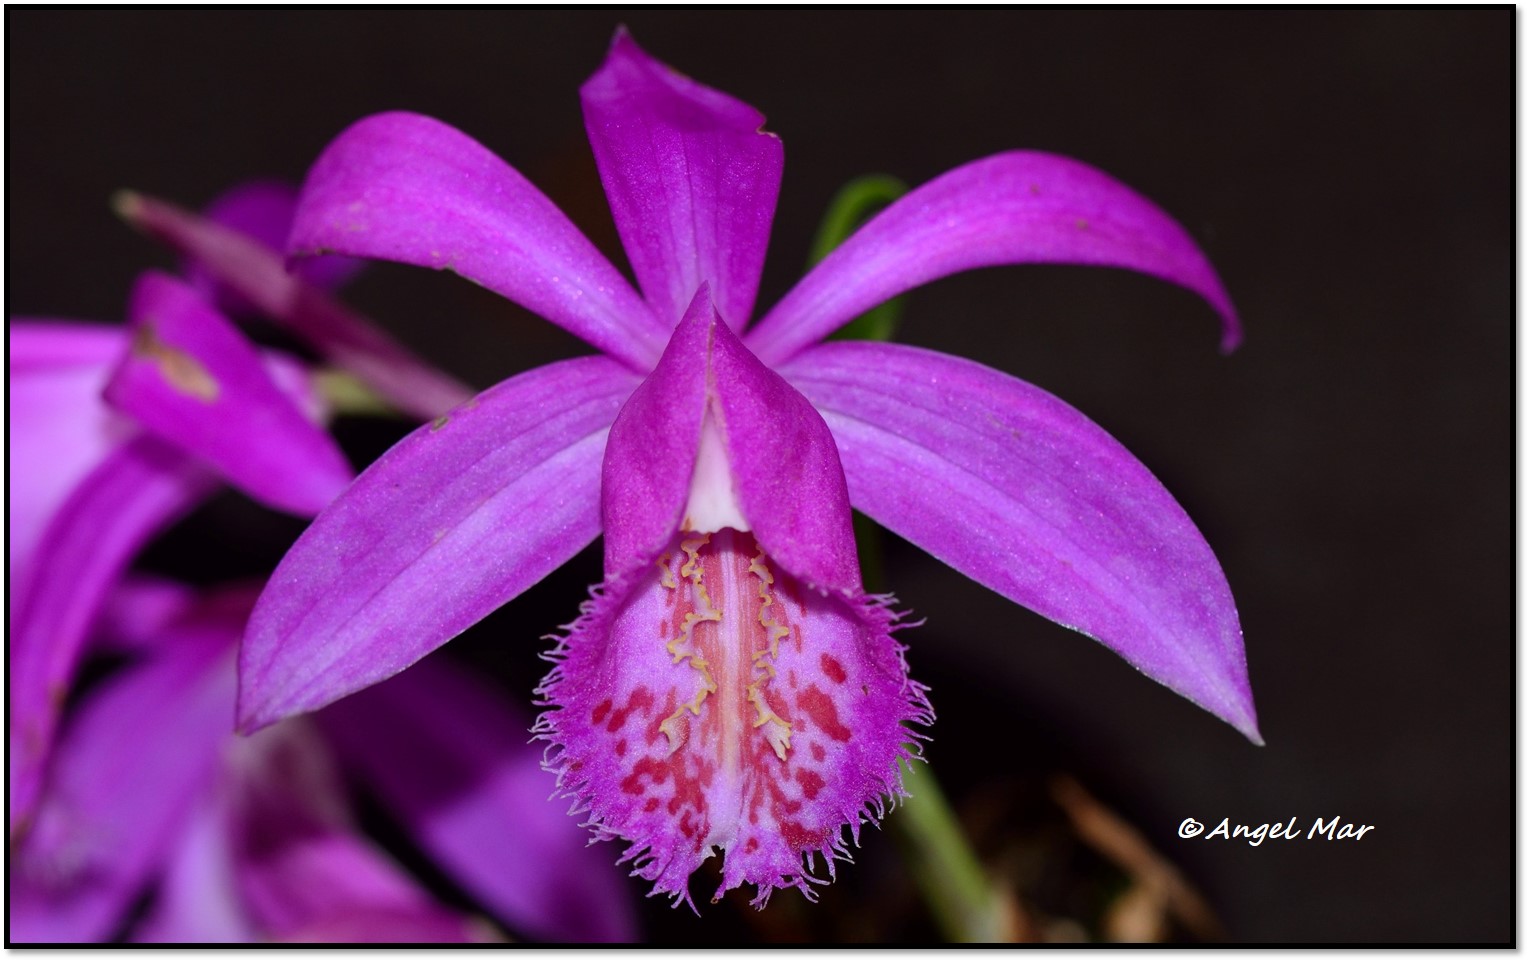 Orquídeas Blog de Angel Mar: Pleione formosana: una exótica orquídea de  exterior - Pleione formosana: an exotic orchid from outside